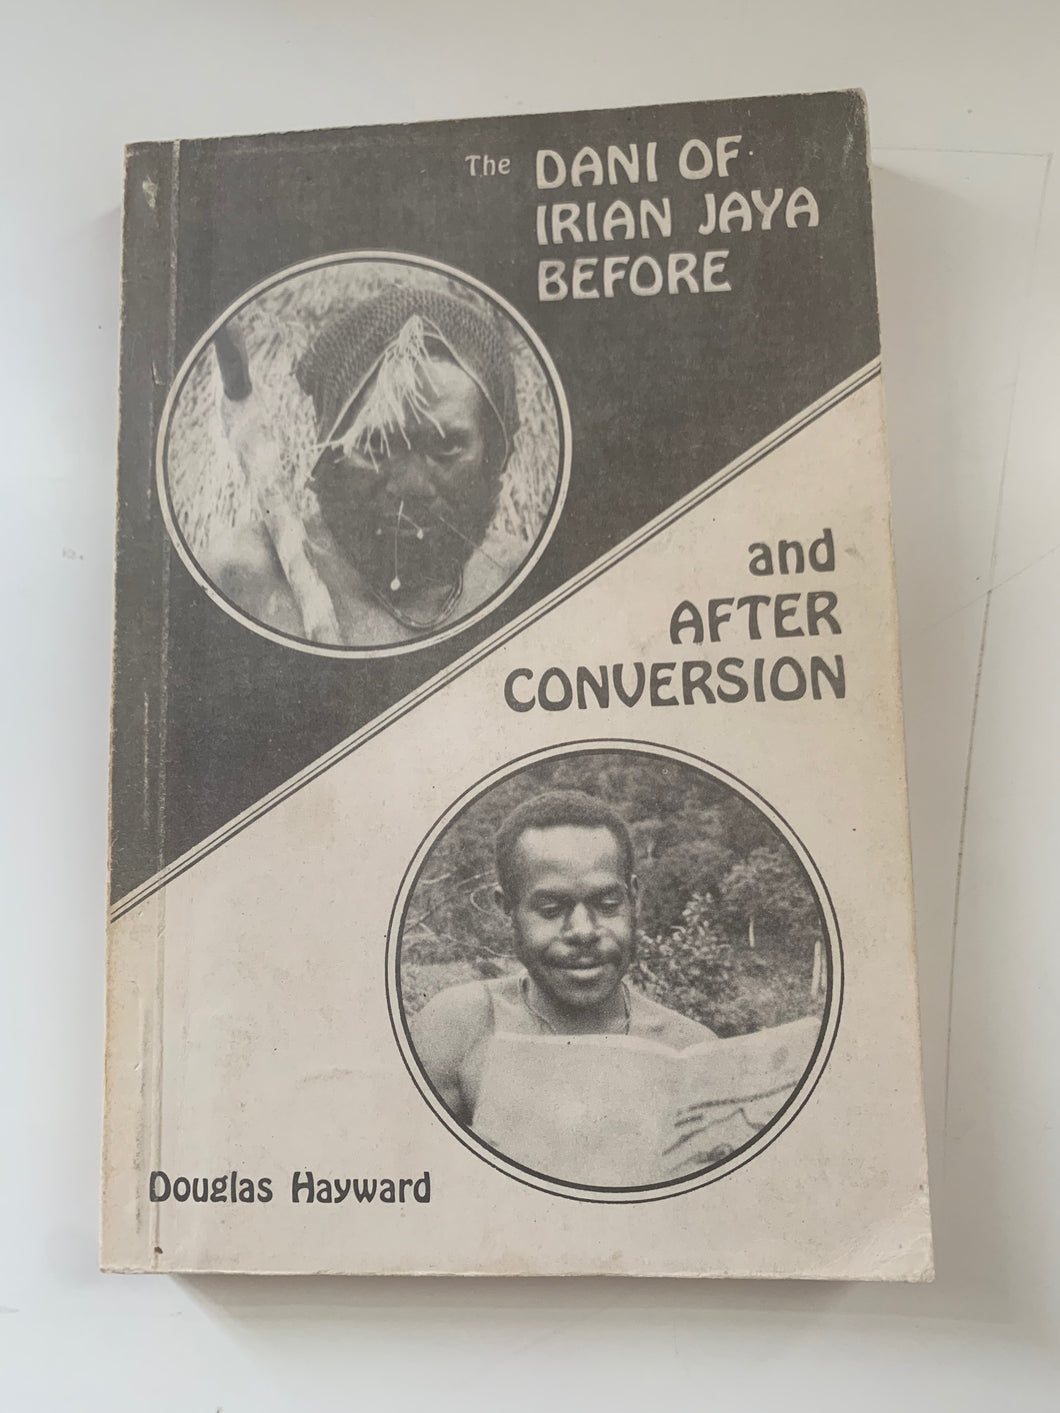 The Dani of Irian Jaya Before and After Conversion by Douglas Hayward